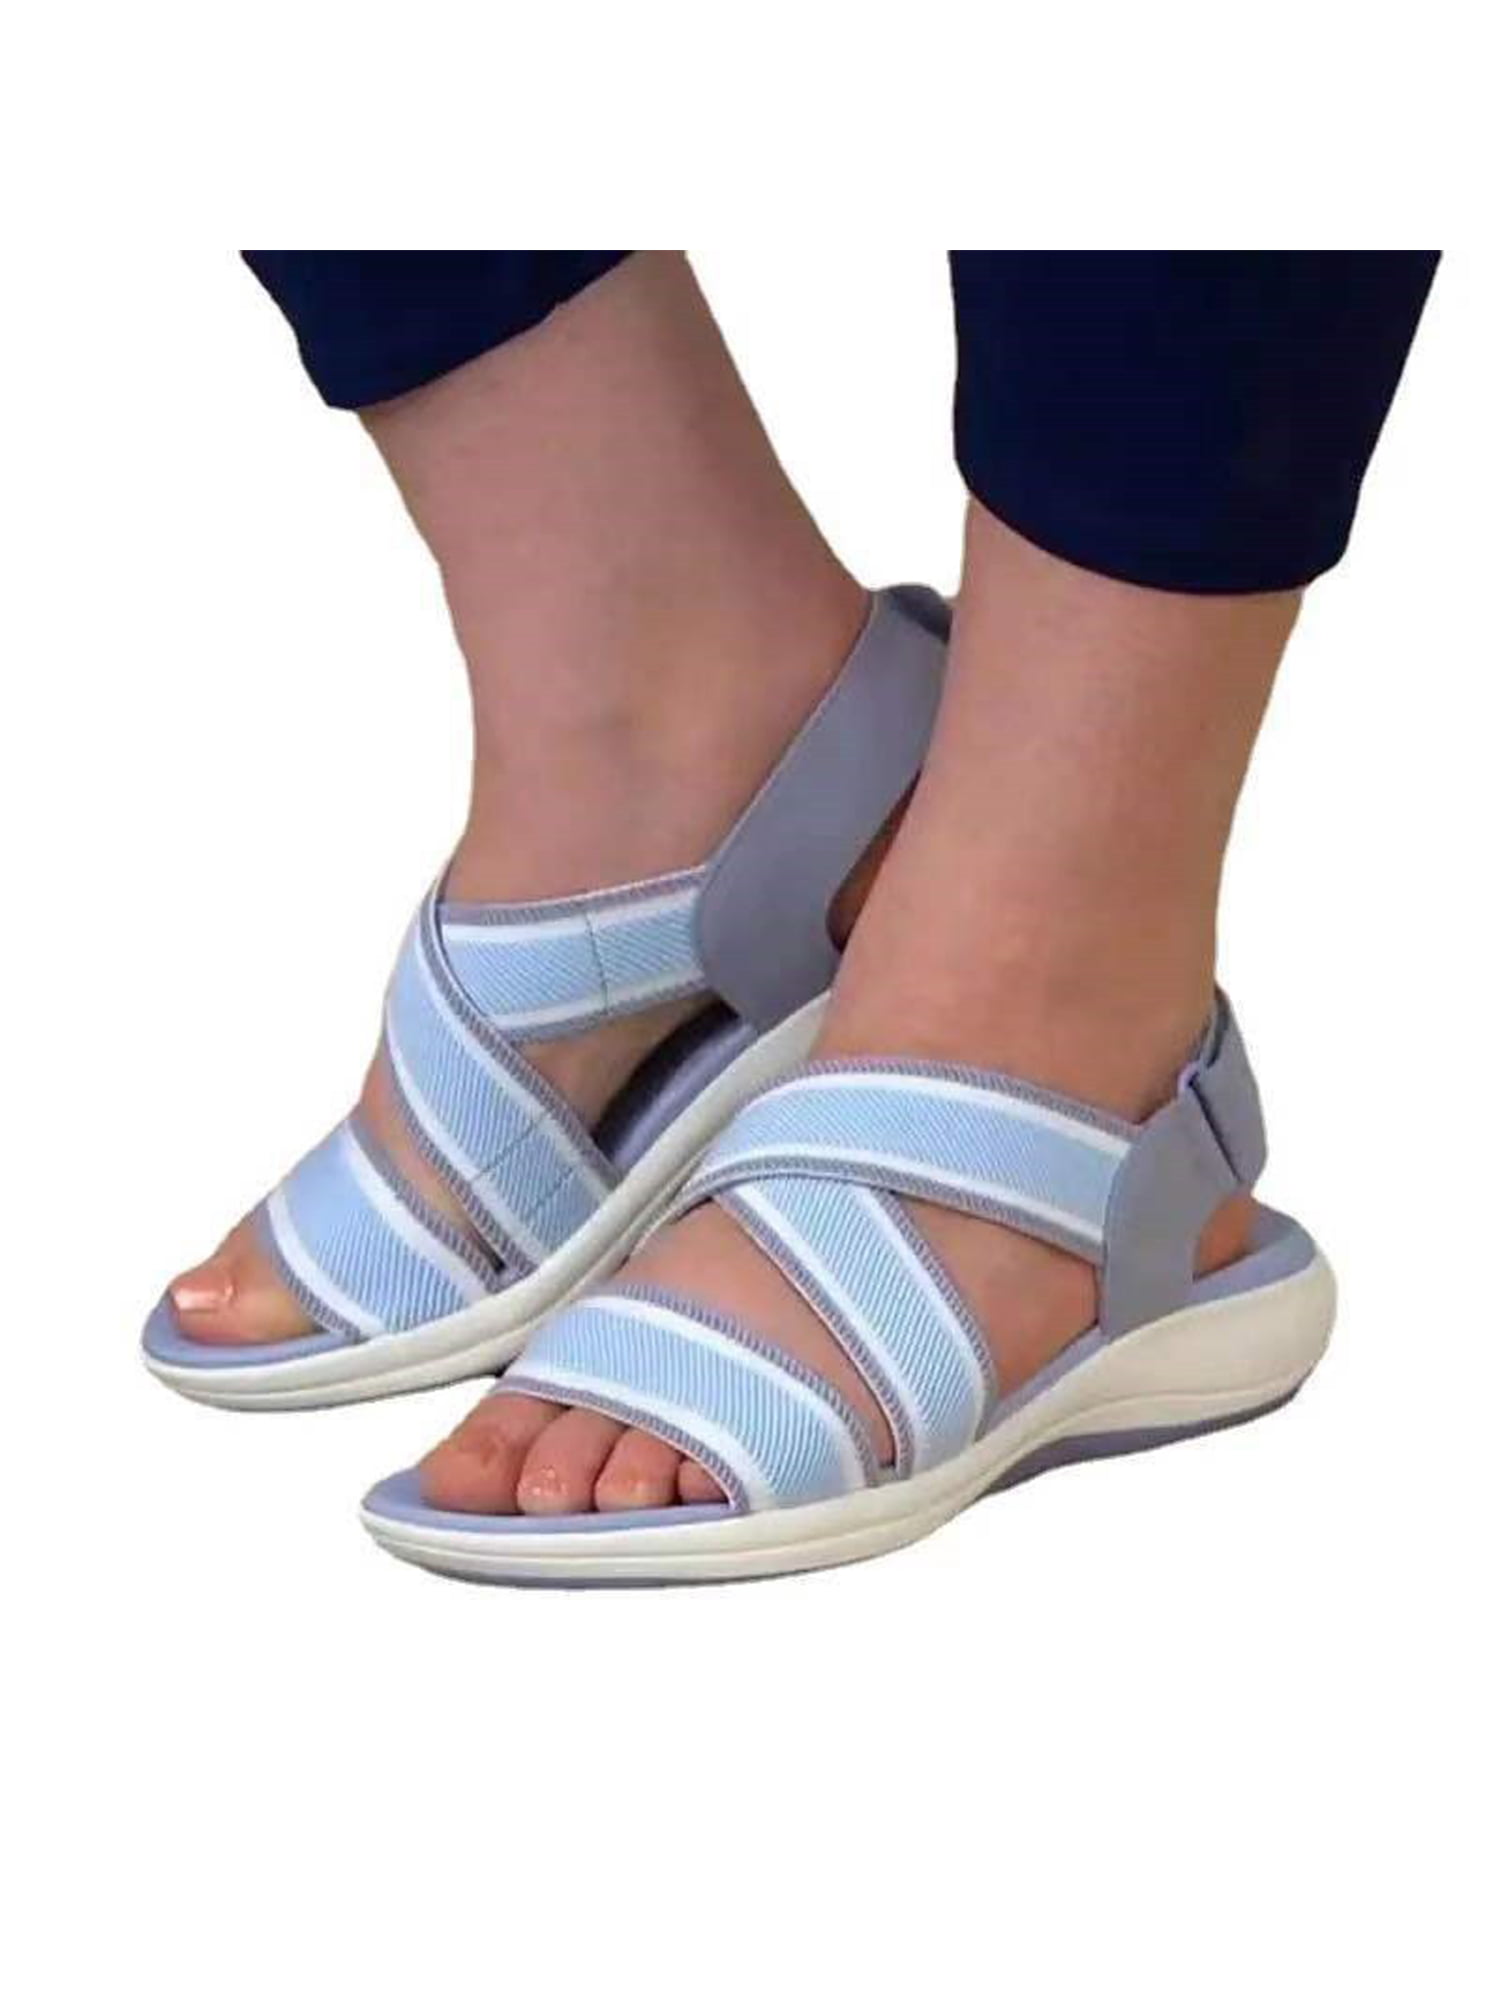 Details about   Women Summer Flat Leopard Print Strap Sandals Breathable Low Heel Comfort Shoes 